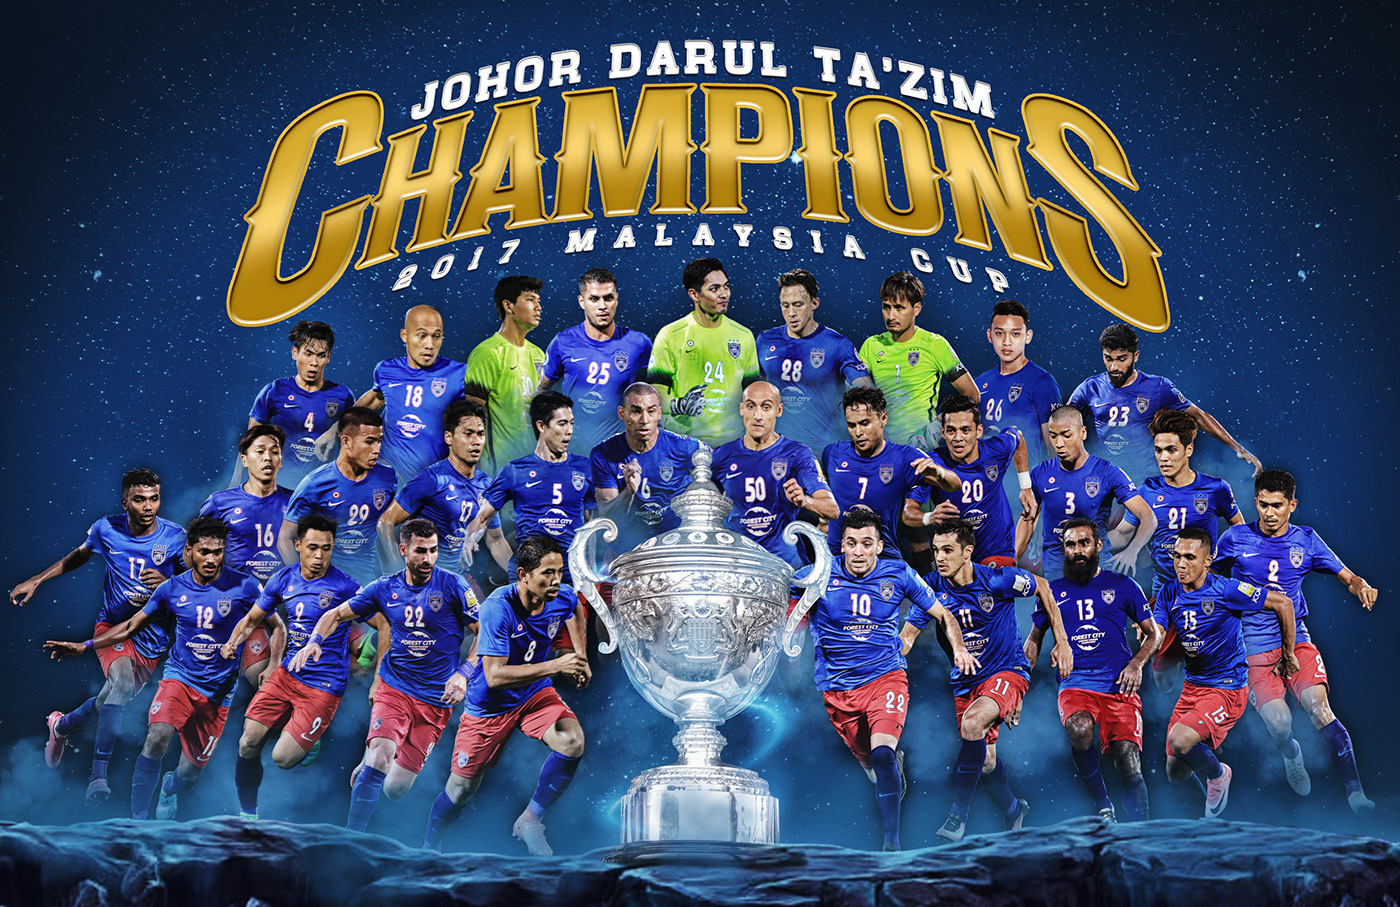 Johor Darul Ta'zim Champions piala malaysia